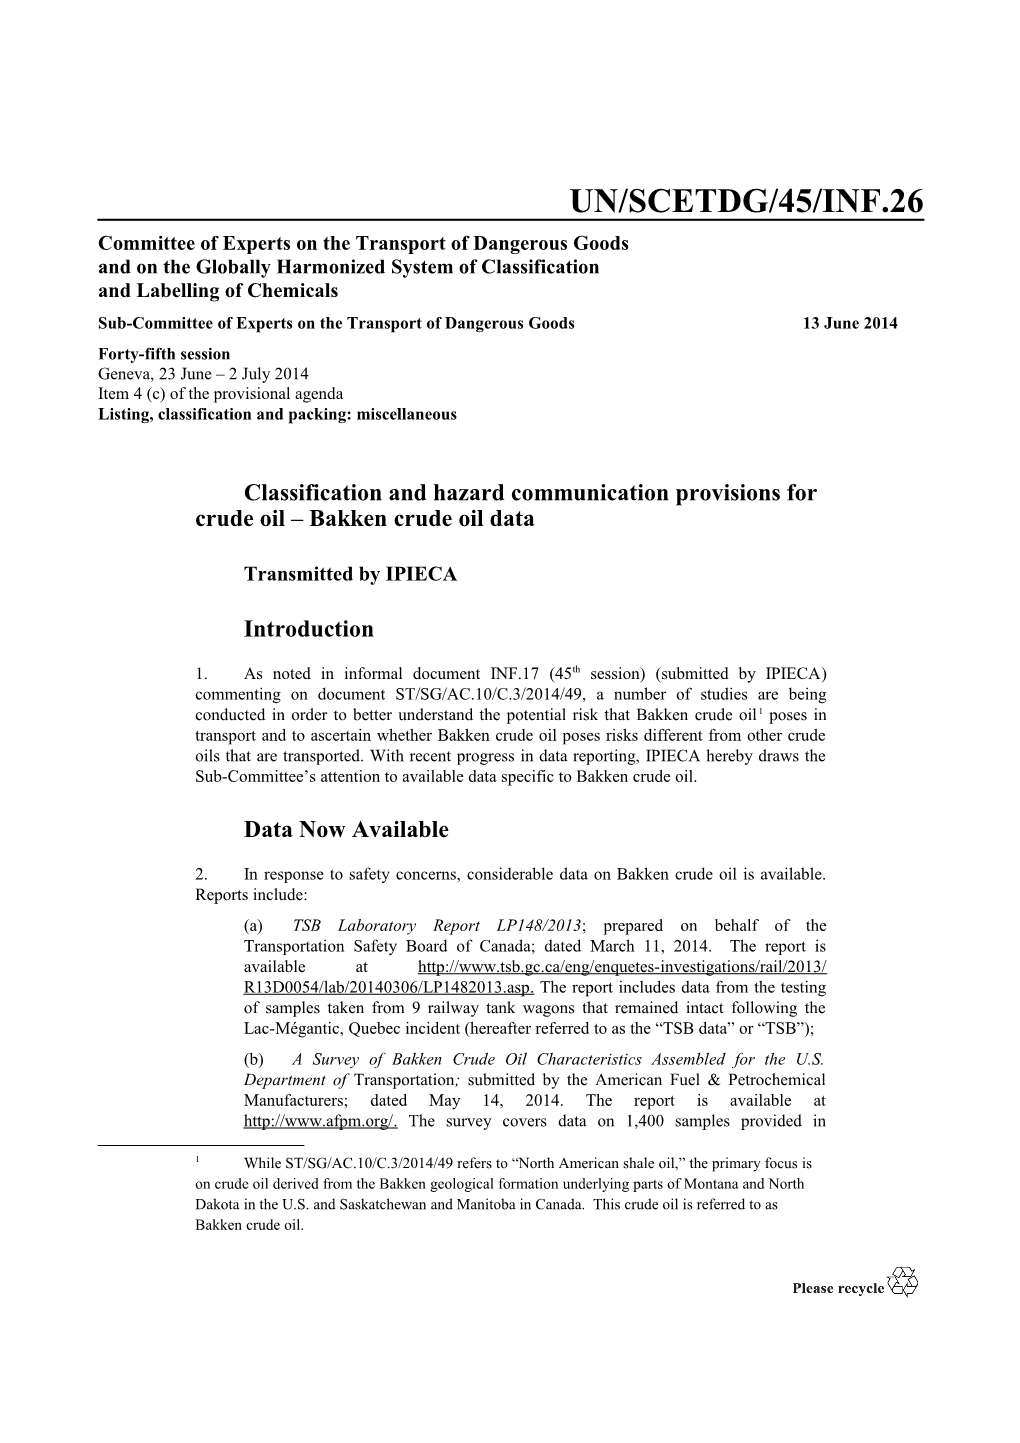 Classification and Hazard Communication Provisions for Crude Oil Bakken Crude Oil Data